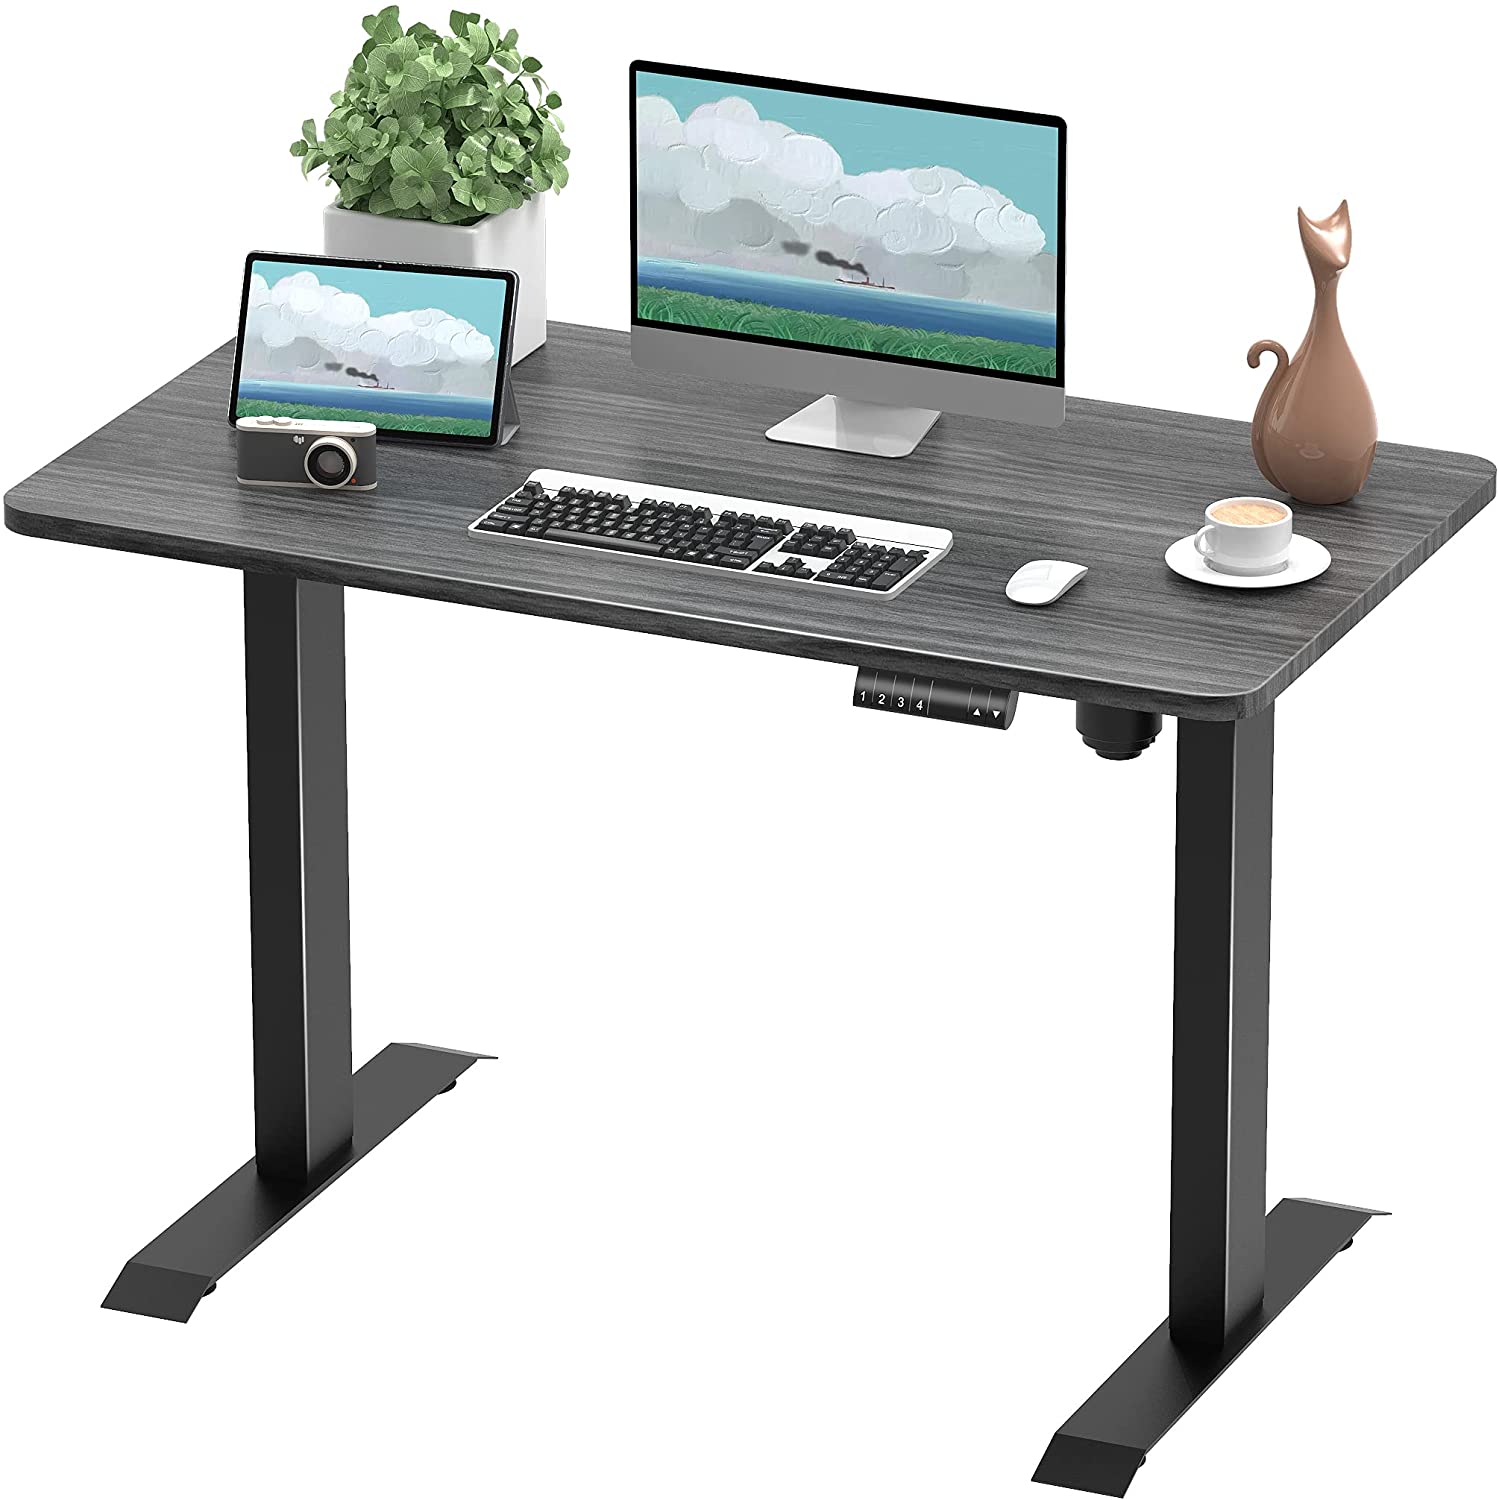 A height adjustable desk 